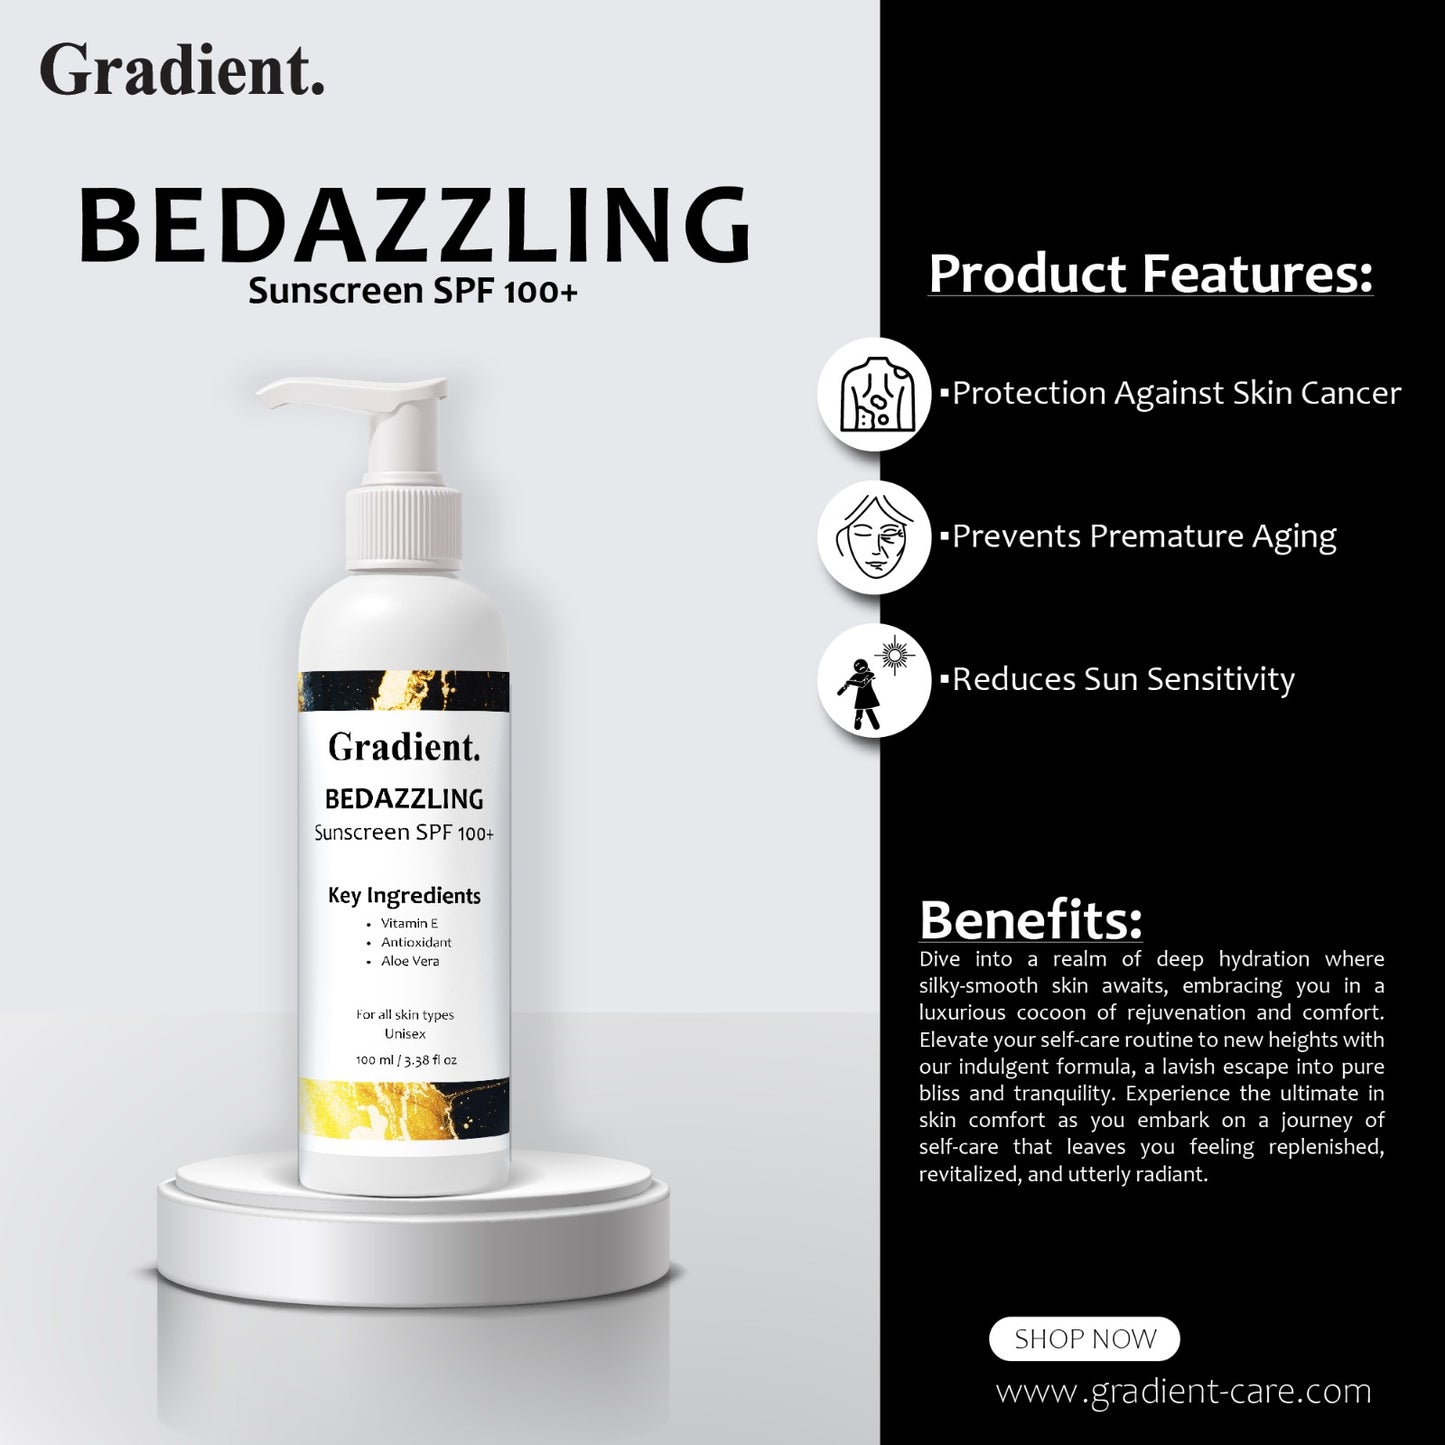 BEDAZZLING - Sunscreen SPF 100+